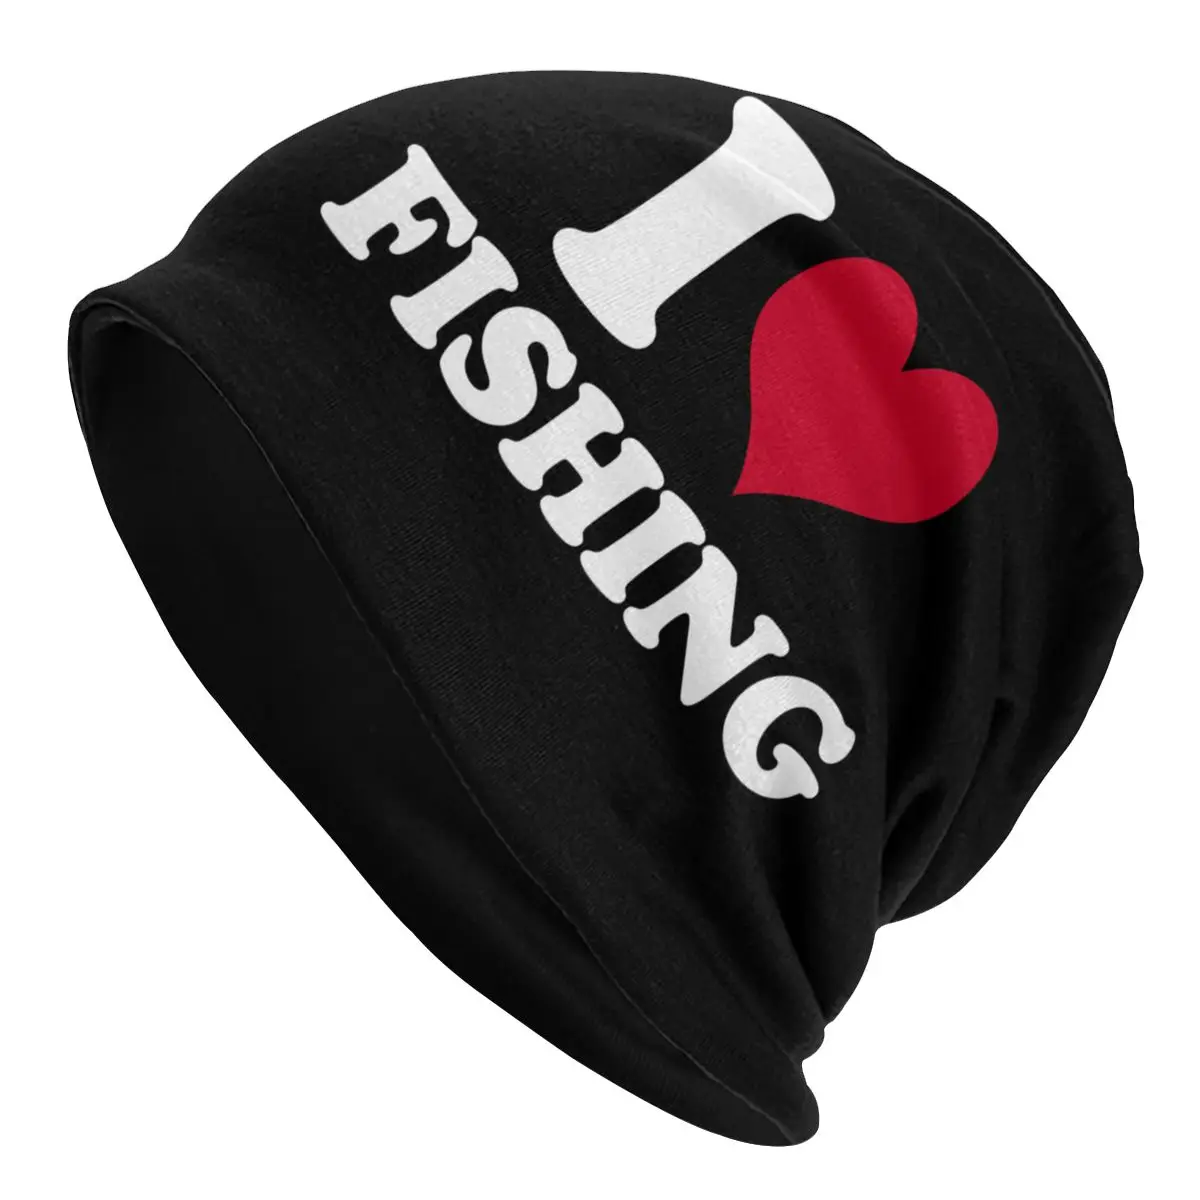 I Love Fishing Beanies Caps For Men Women Unisex Street Winter Warm Knitted Hat Adult Fisherman Fish Bonnet Hats